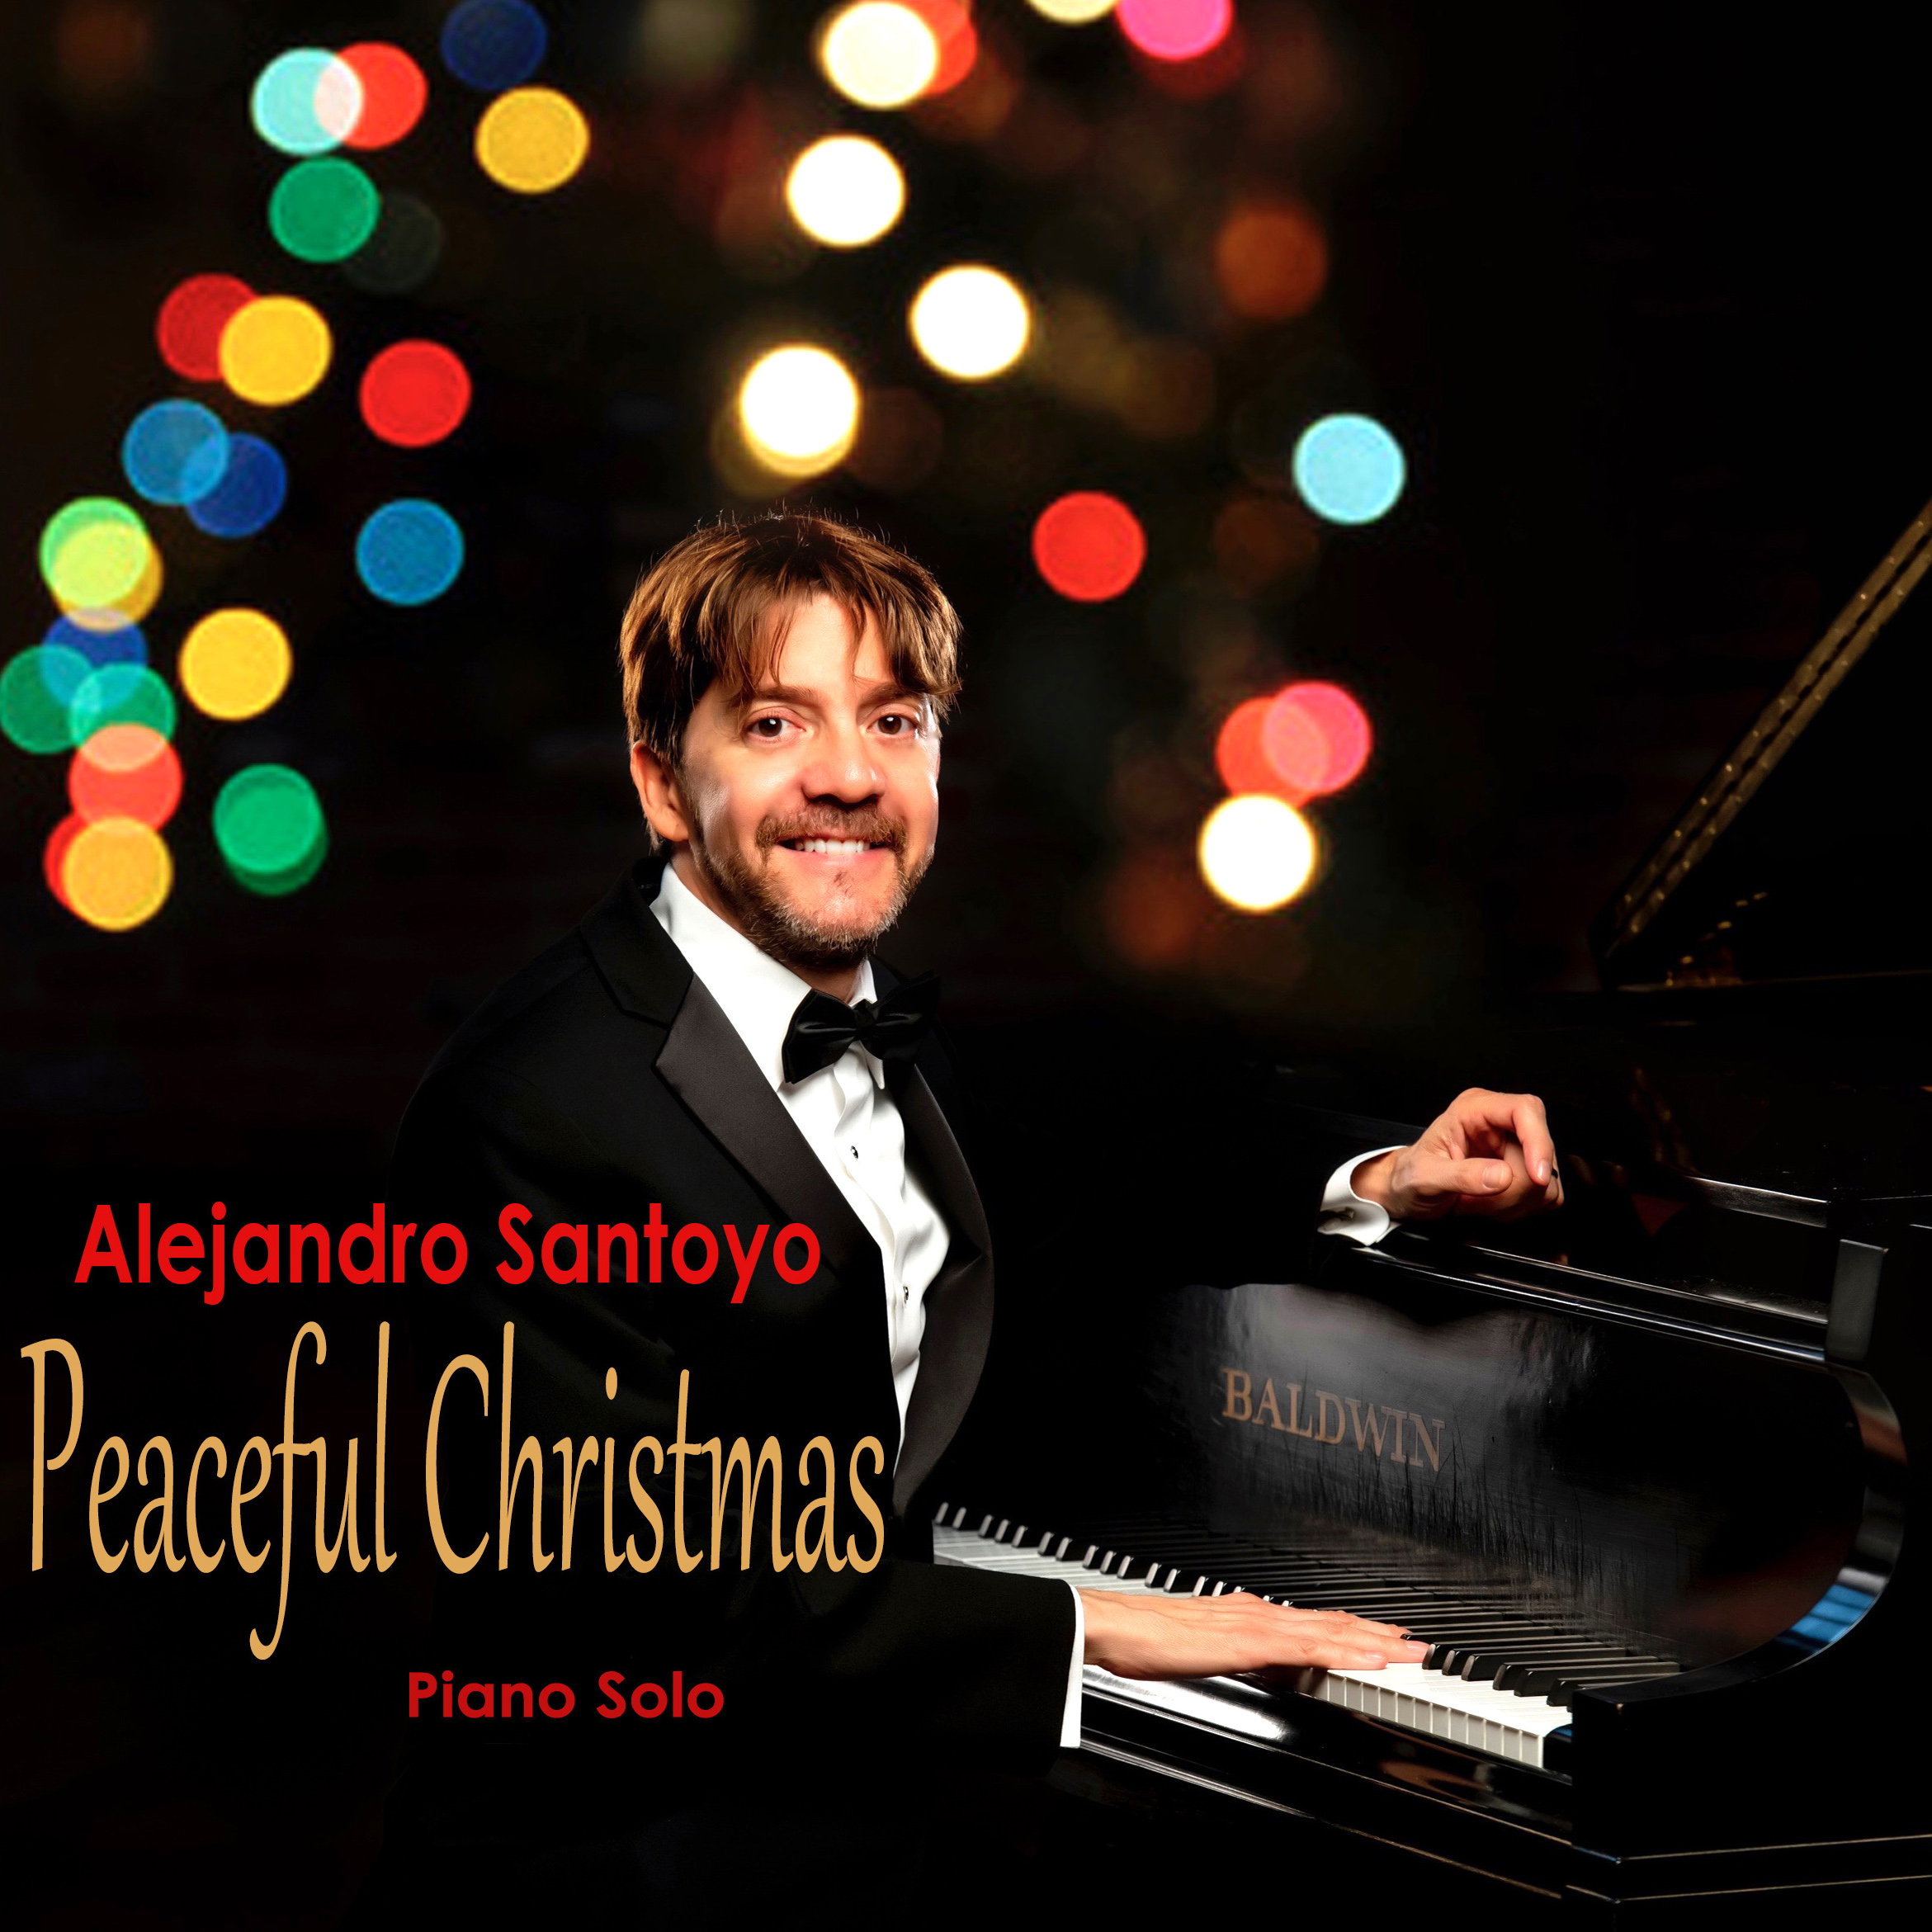 "Peaceful Christmas" Alejandro Santoyo